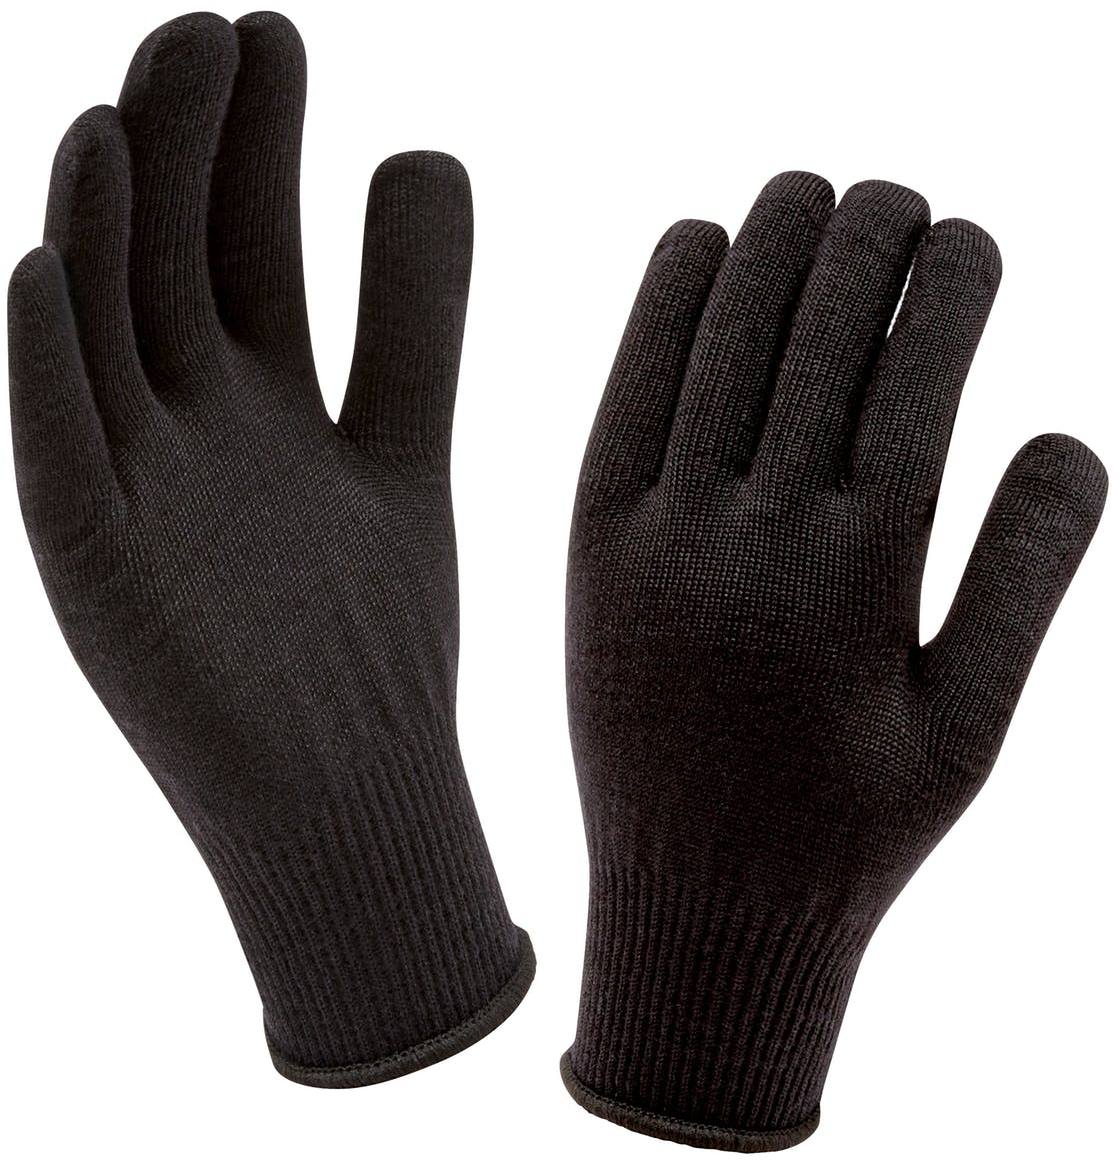 SealSkinz Solo Merino Liner Glove